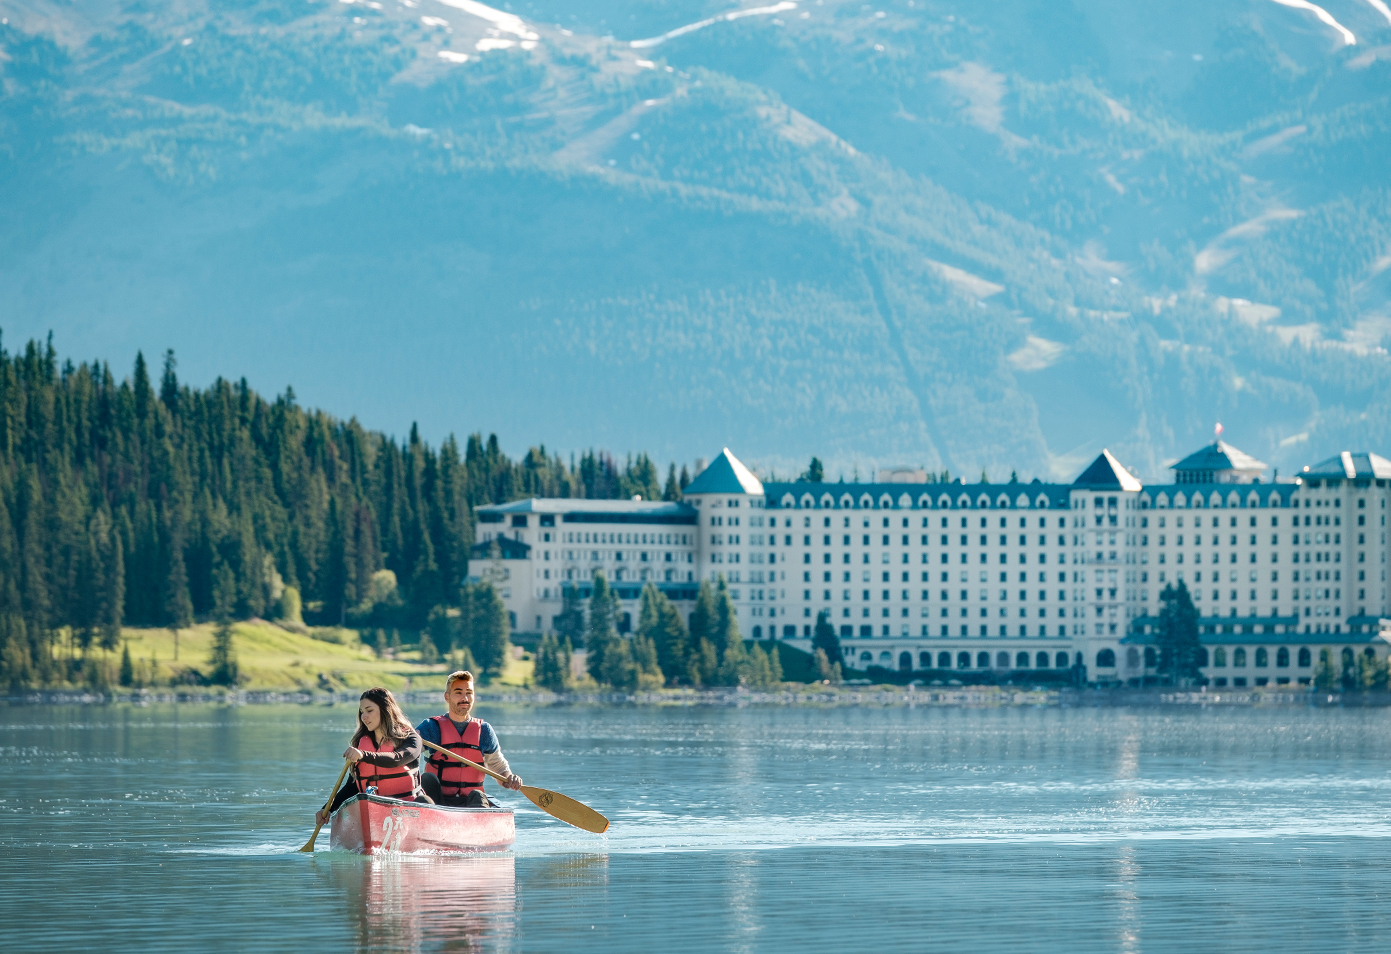 Fairmont Chateau Lake Louise Hotel, Banff National Park, Alberta, Canada